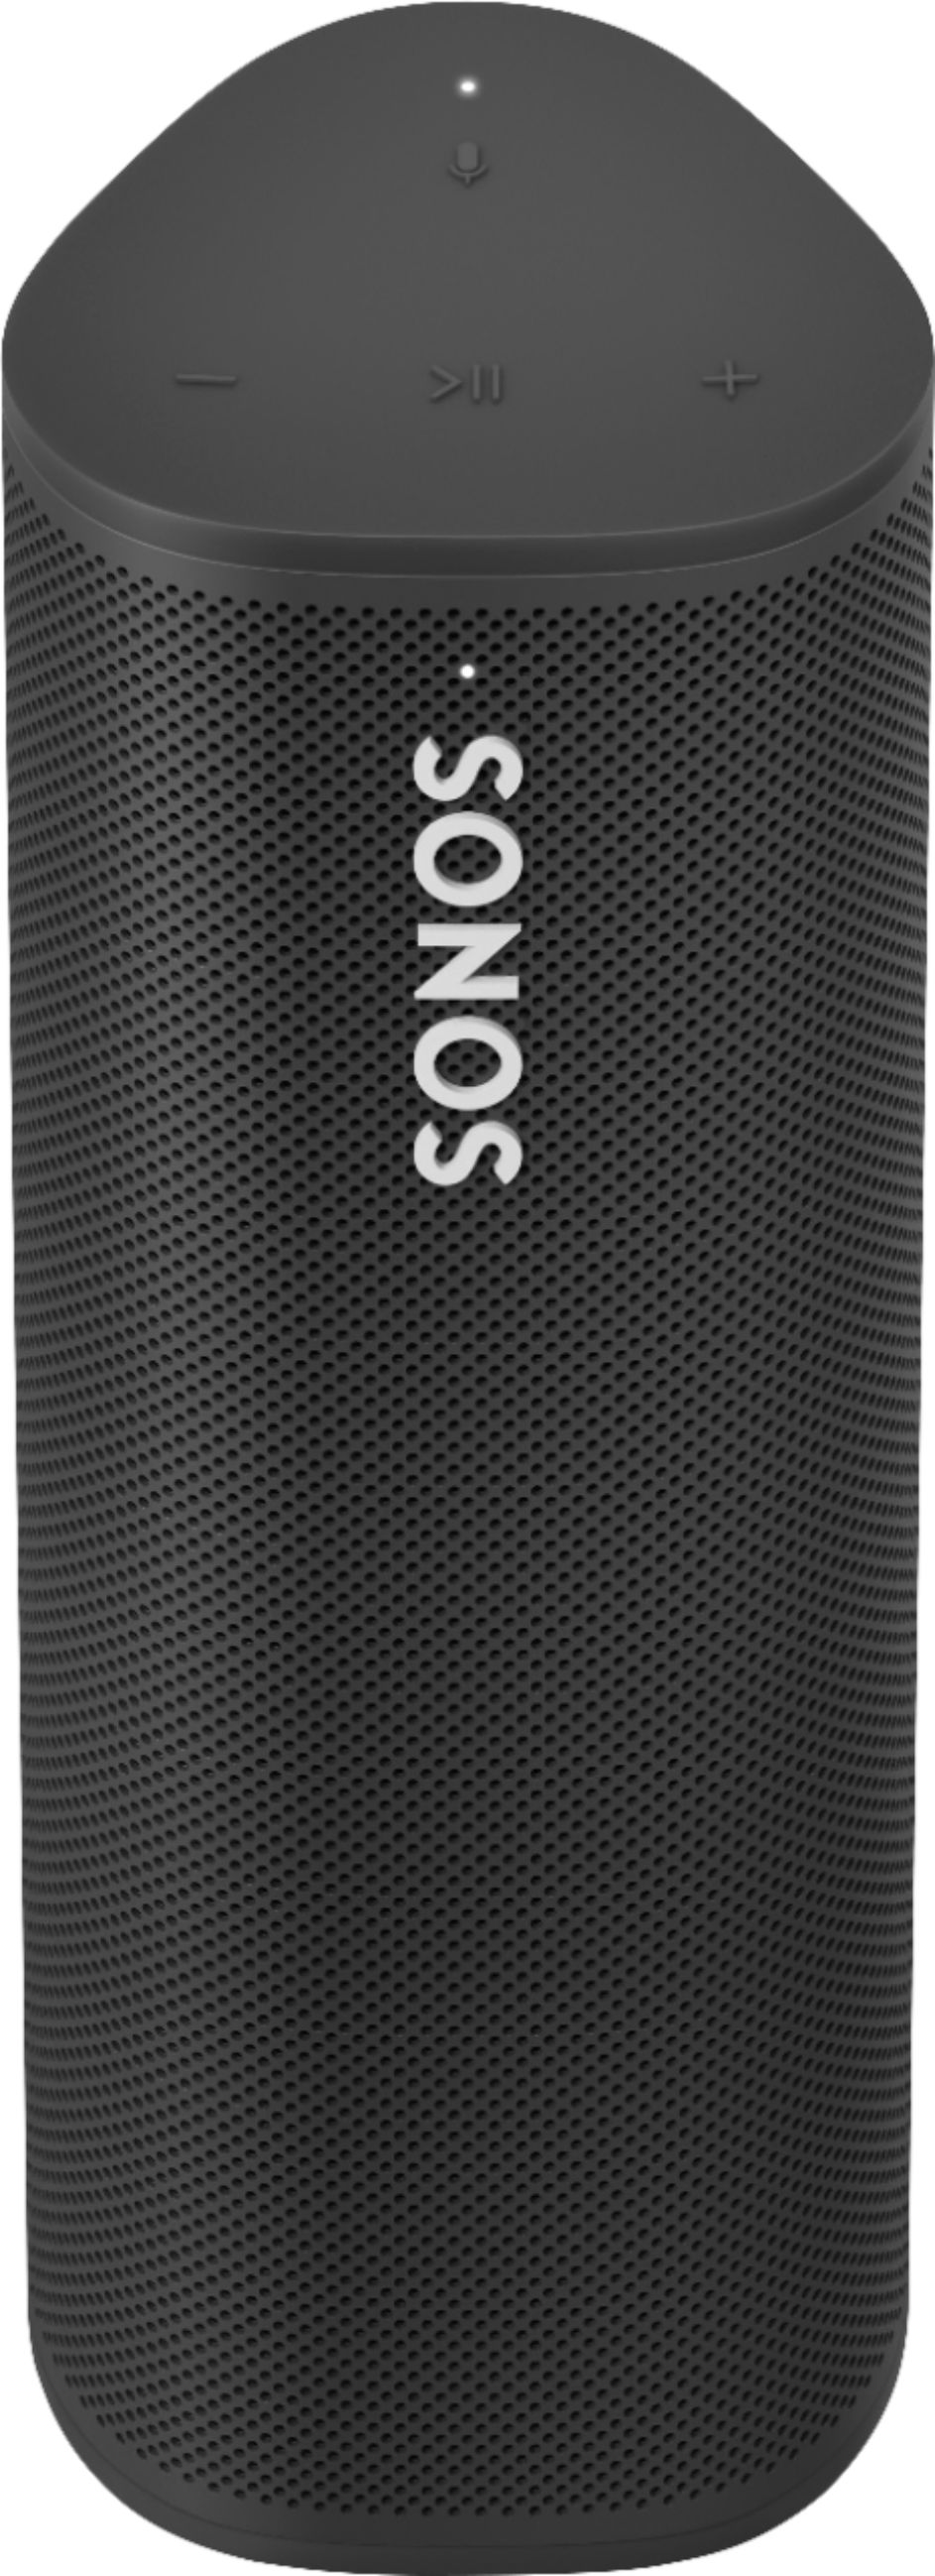 Are Sonos Speakers Bluetooth 